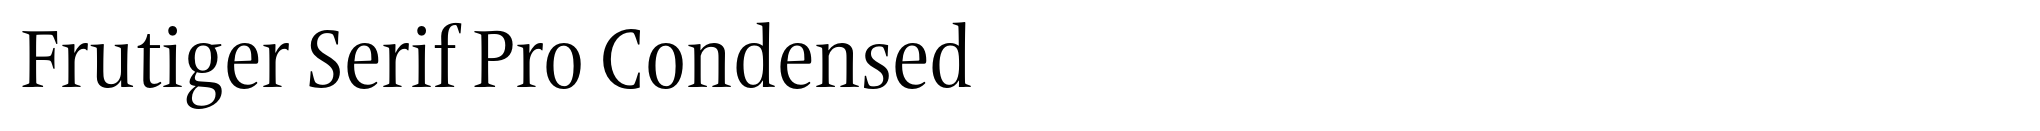 Frutiger Serif Pro Condensed image